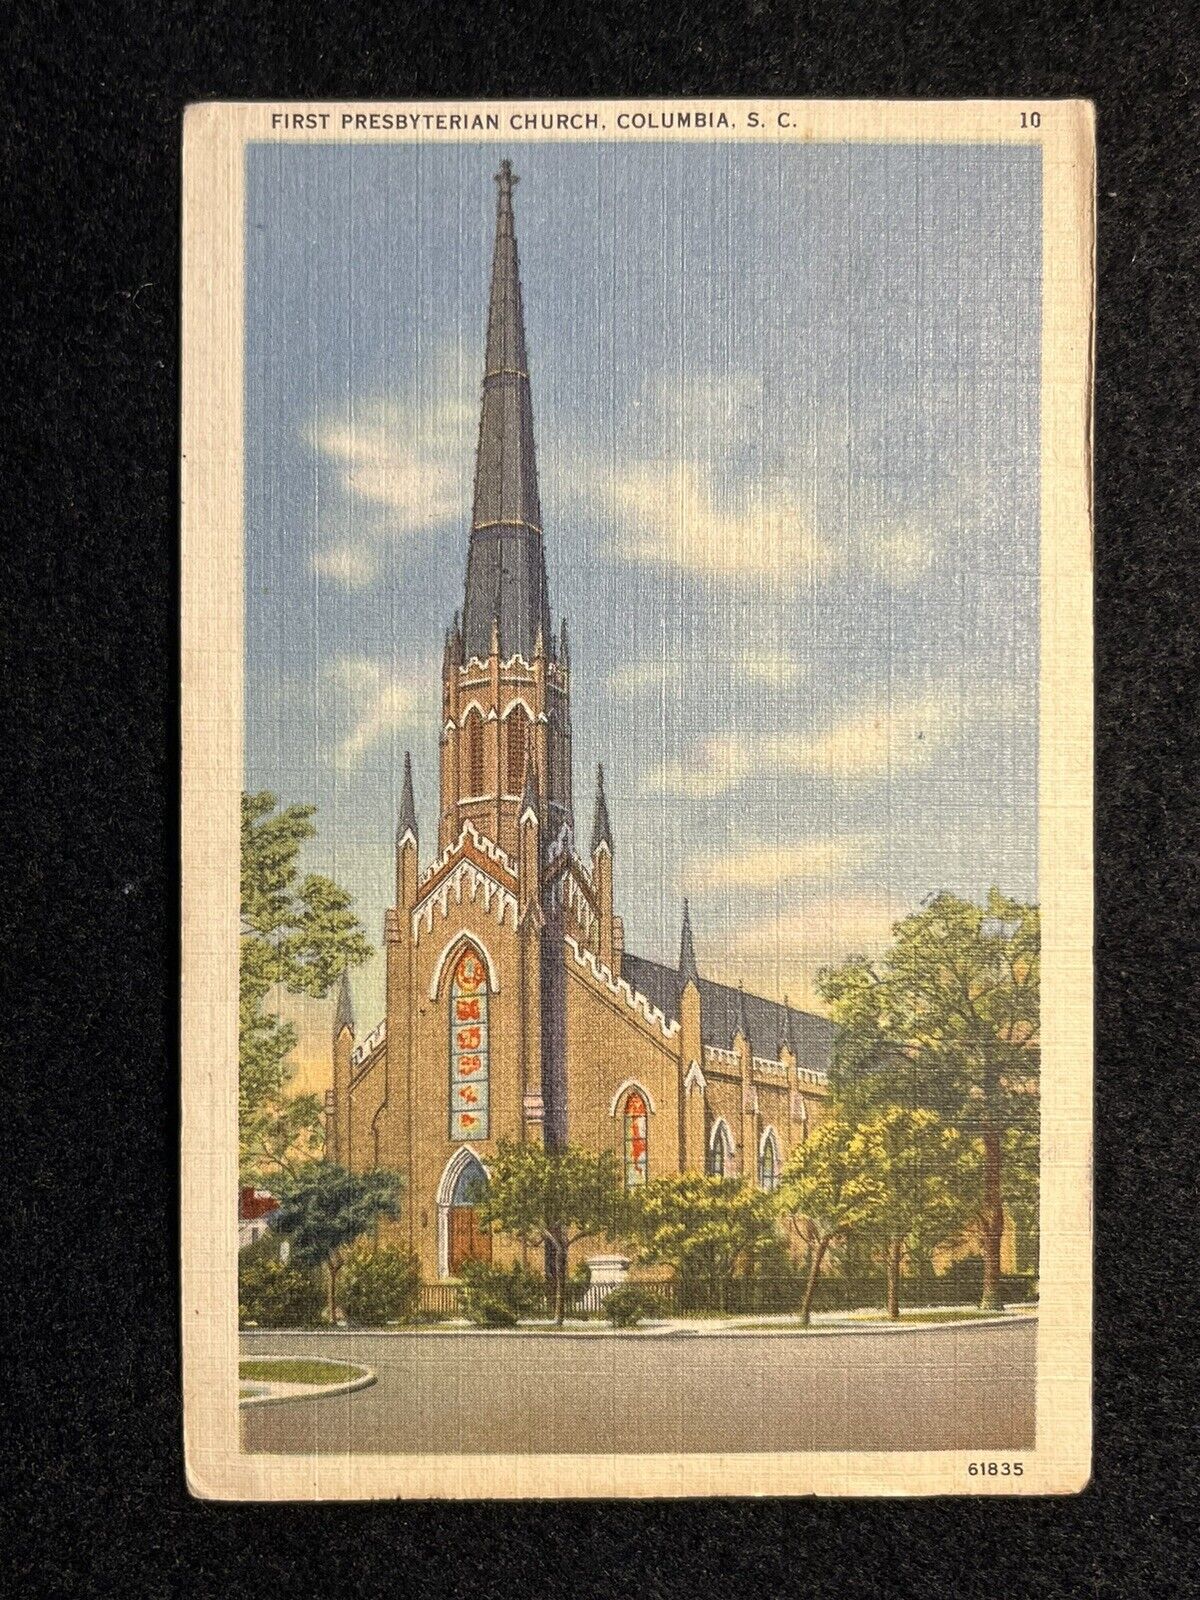 VINTAGE 1952 FIRST PRESBYTERIAN CHURCH POSTCARD COLUMBIA SC to ATLANTA GEORGIA